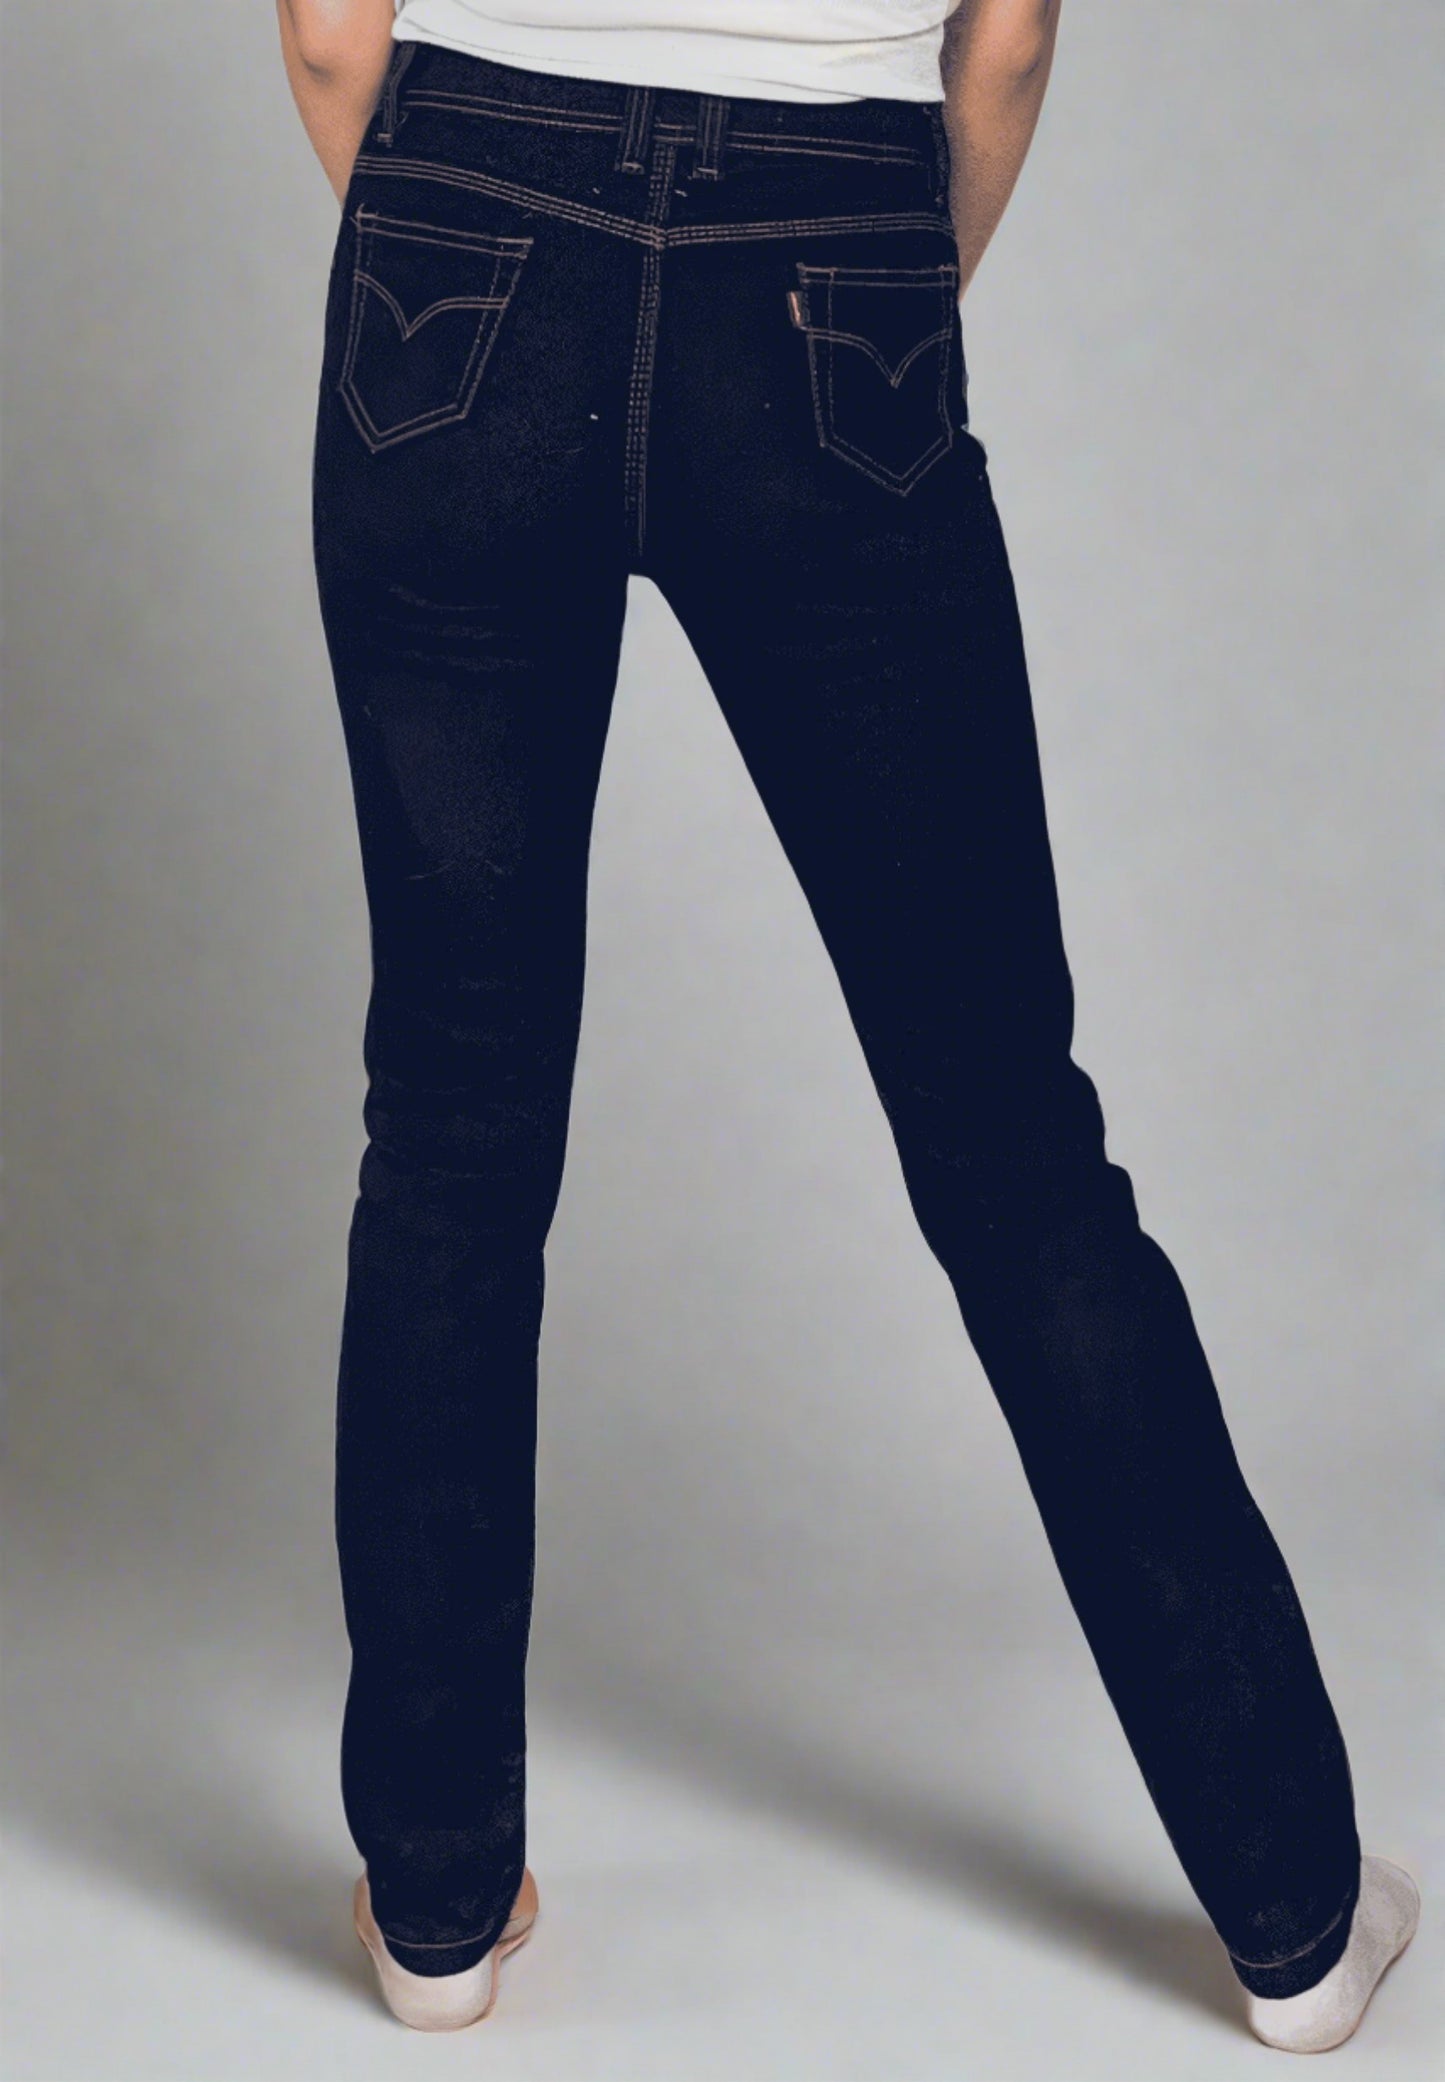 Elegantes Pantalones Bootcut Azules Oscuros para Mujer - Tendencia PDMX